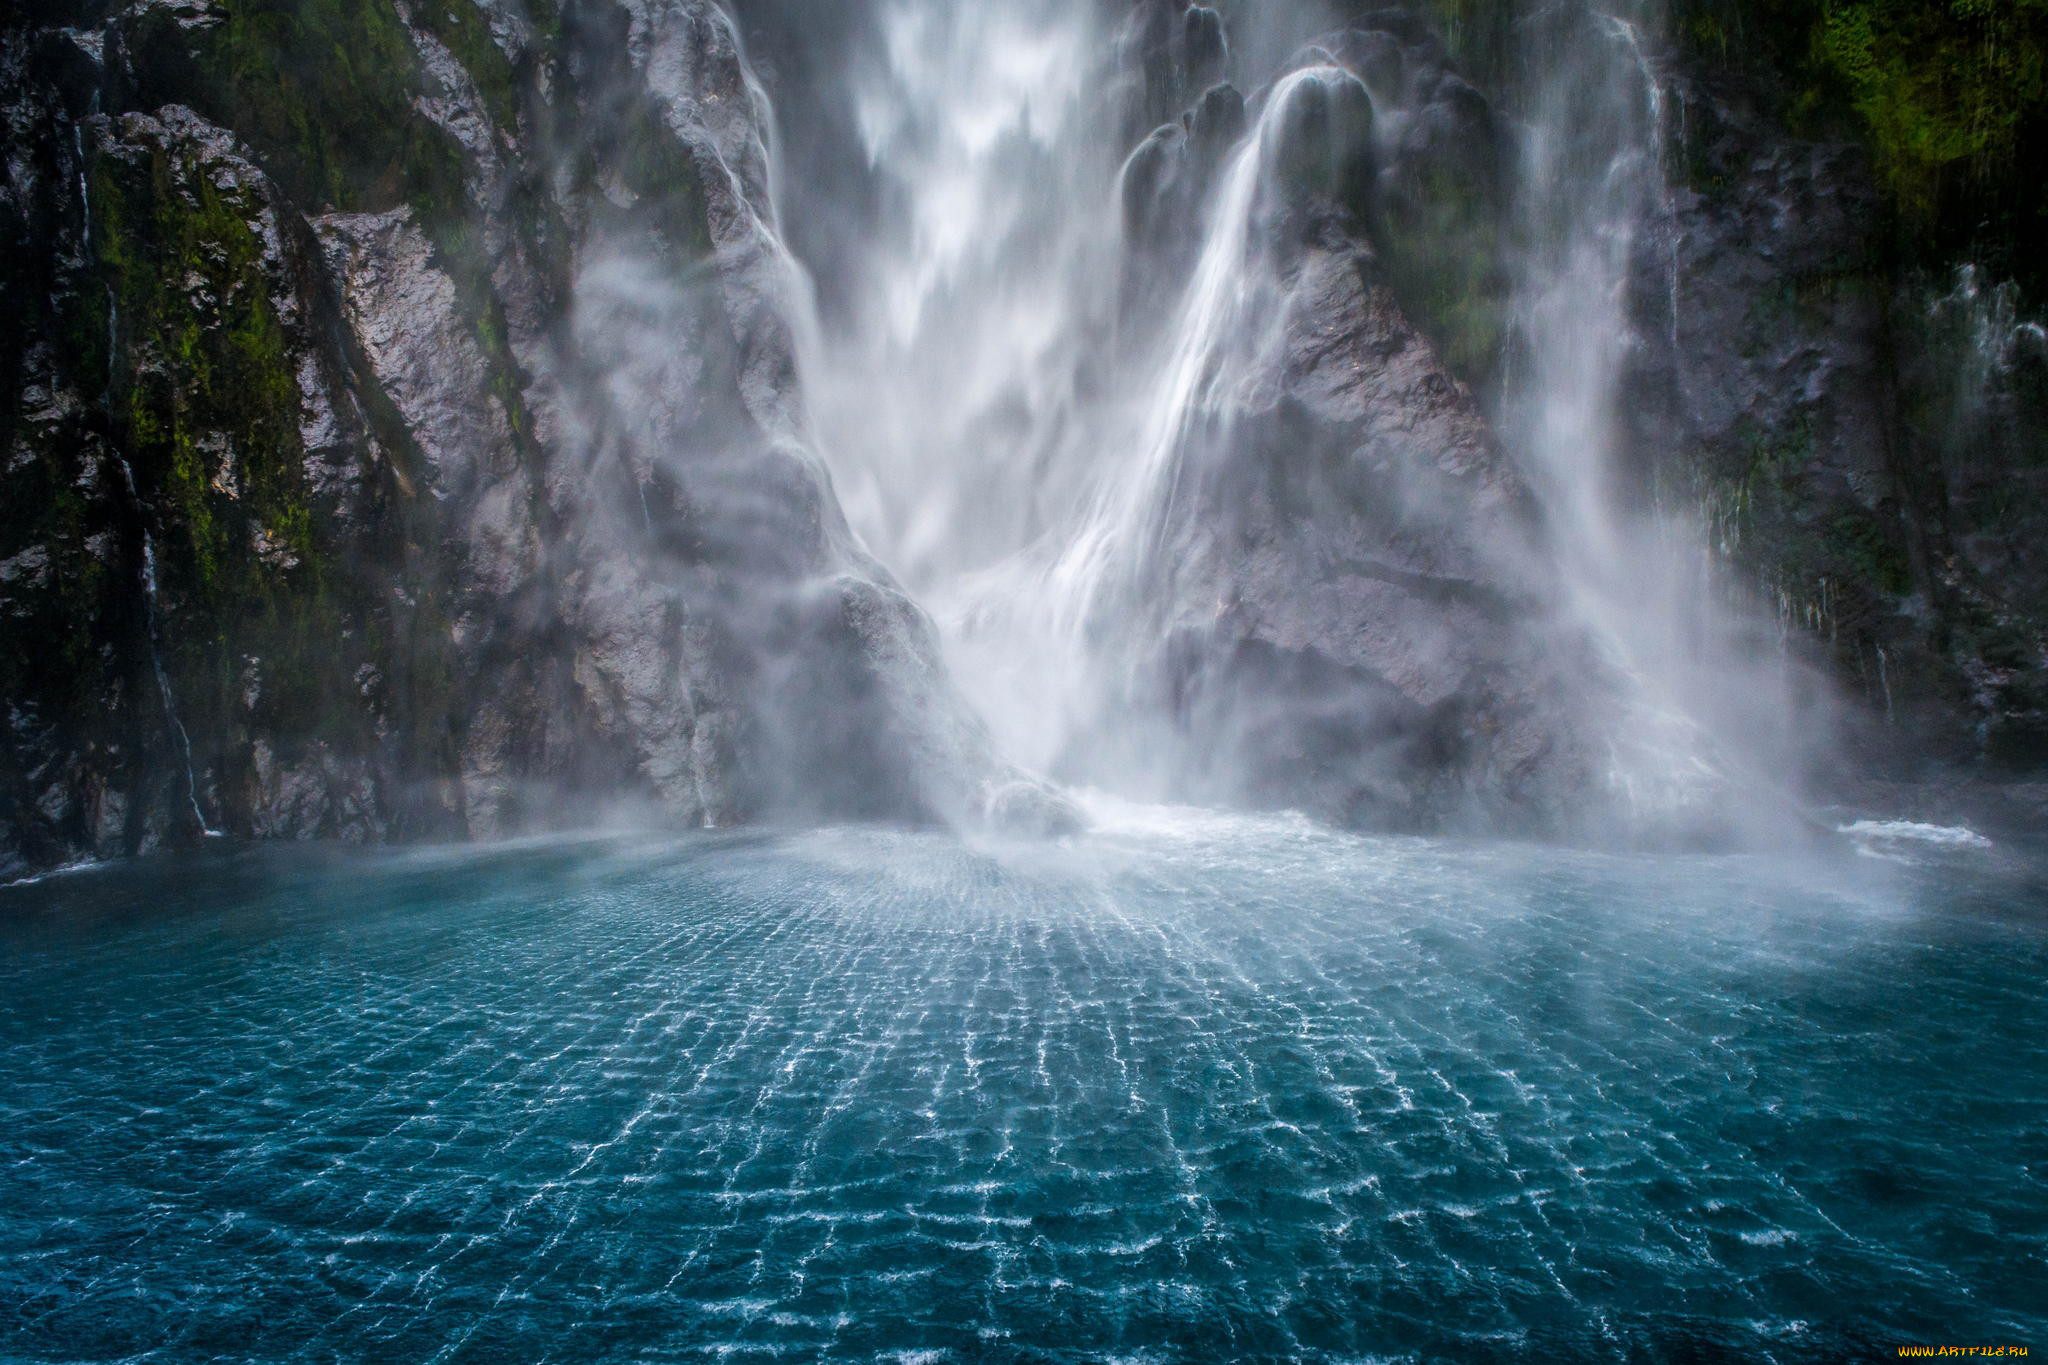 Картинки на телефон на заставку. Водопад « голубая Лагуна» ( г.холм). Милфорд саунд обратные водопады. Водопад Фэнго. Водопад Нгалиема.